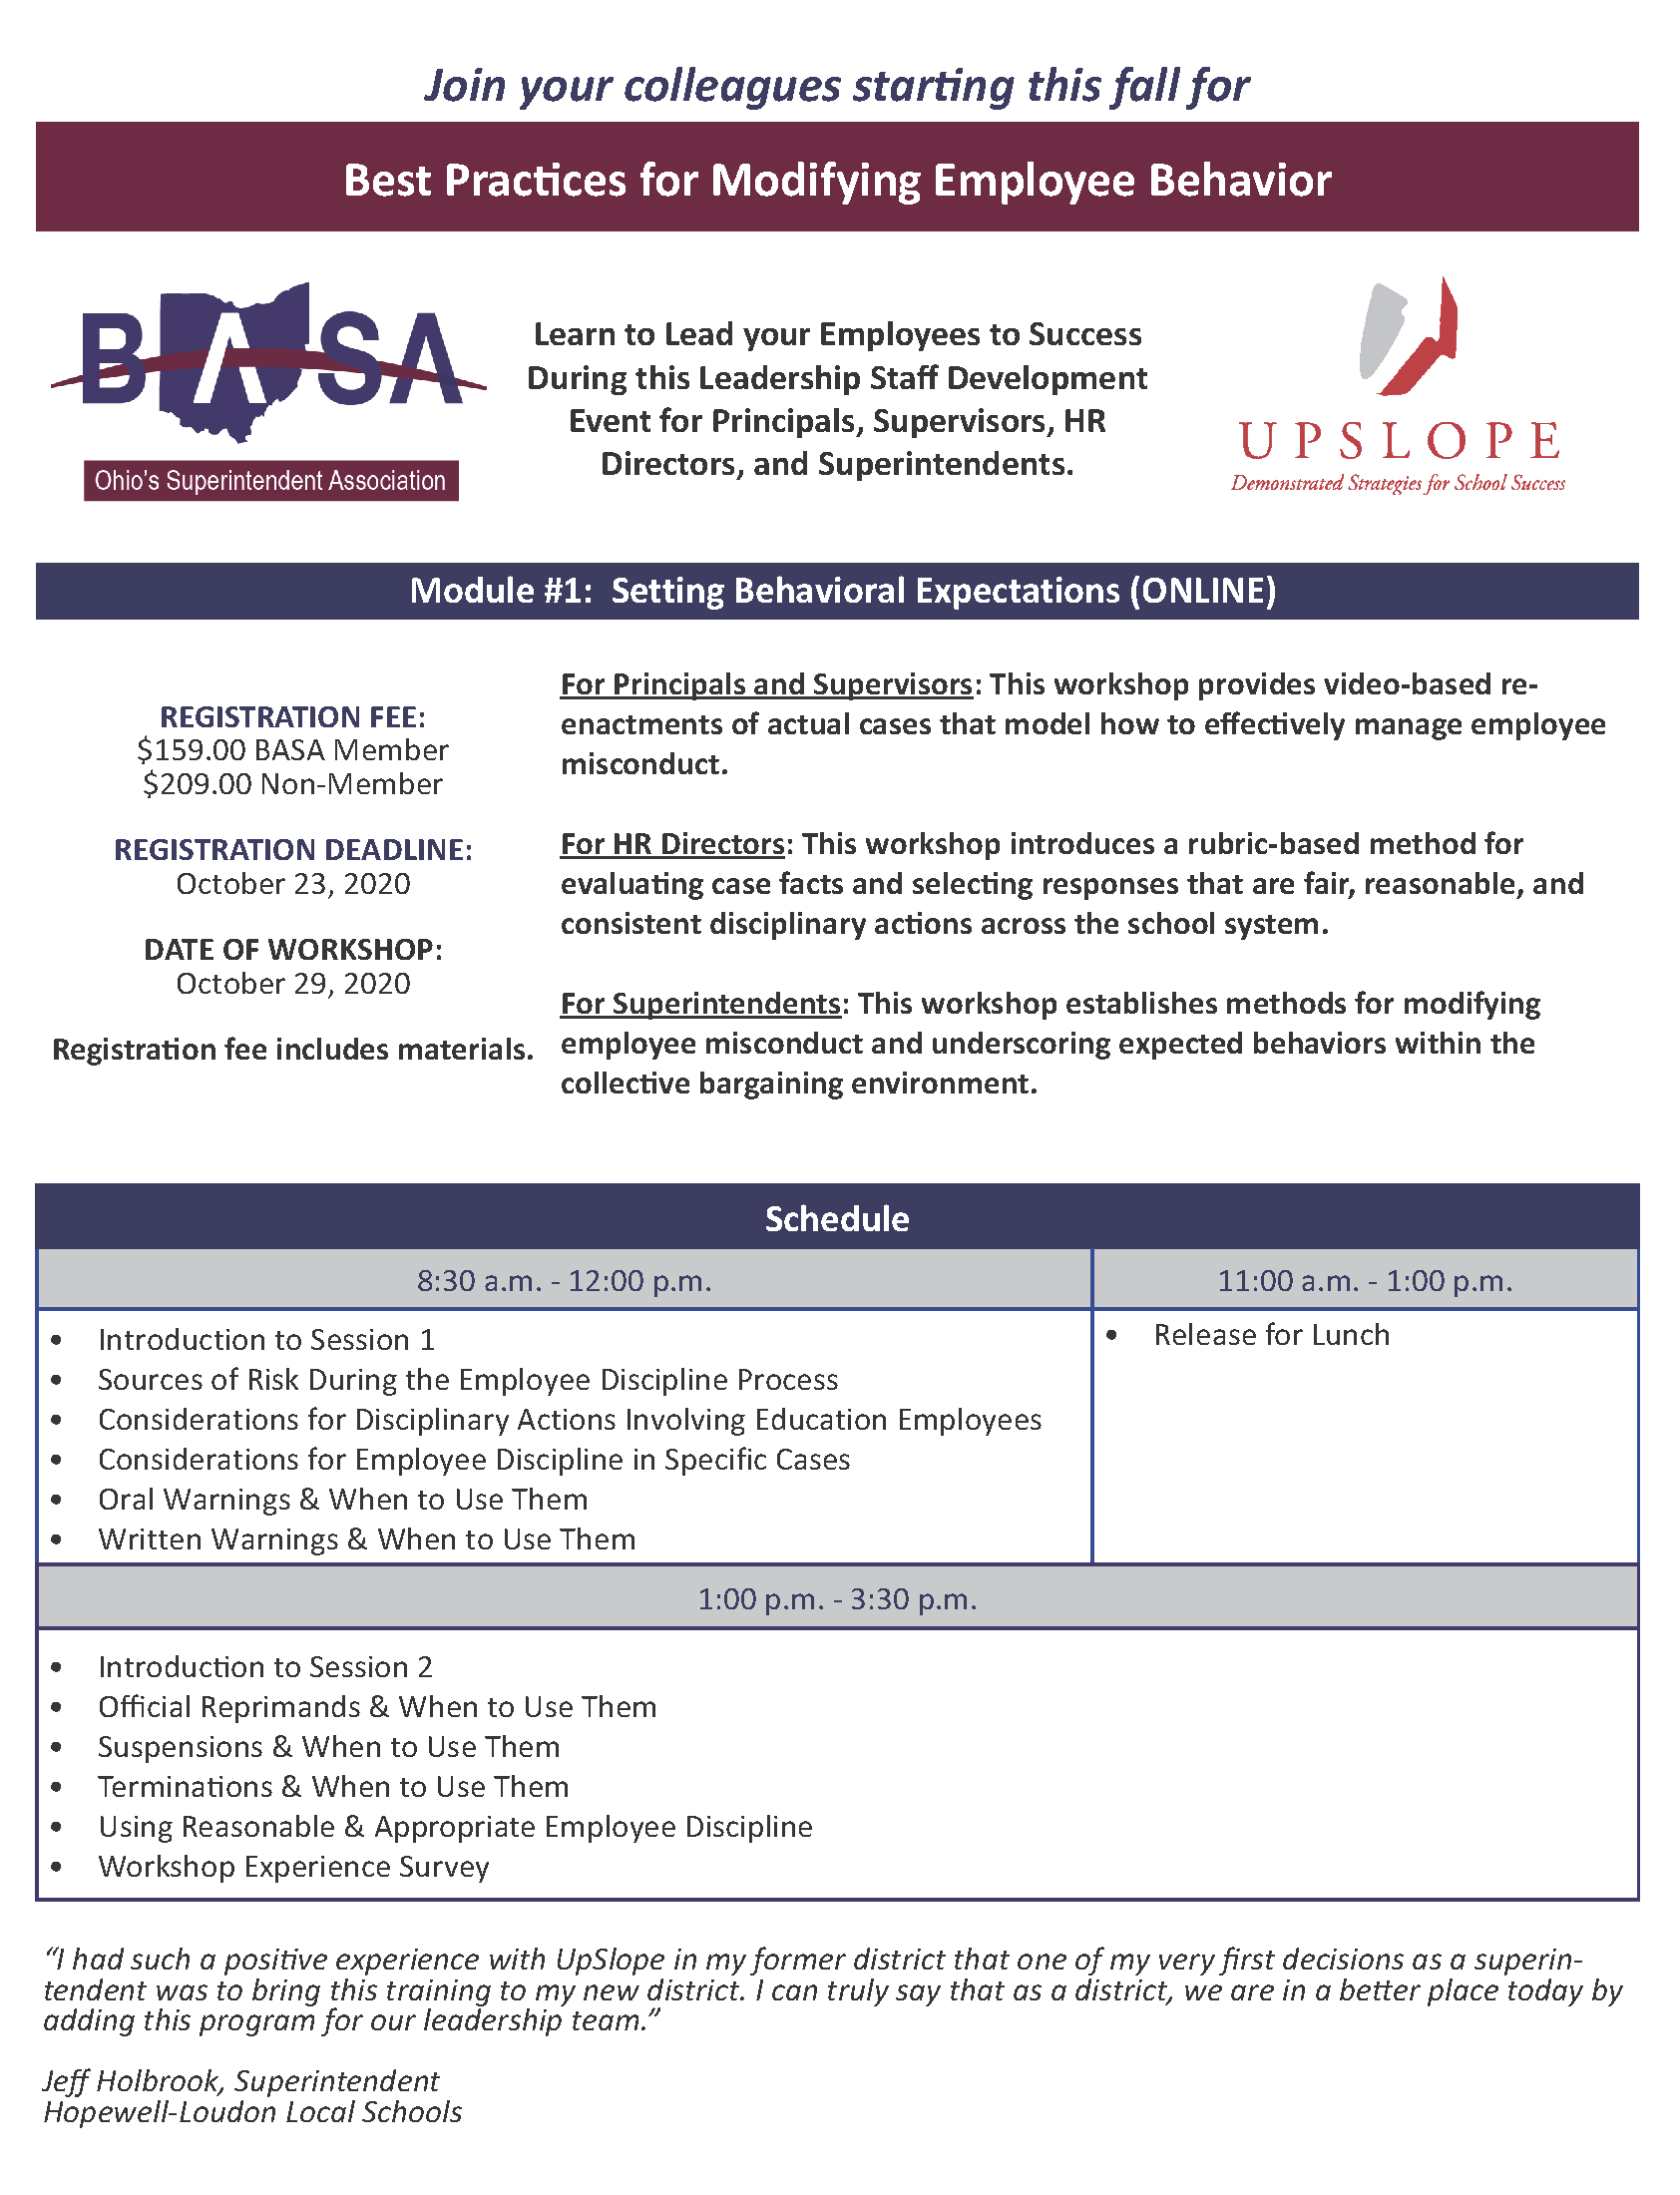 Best Practices for Modifying Employee Behavior @ BASA